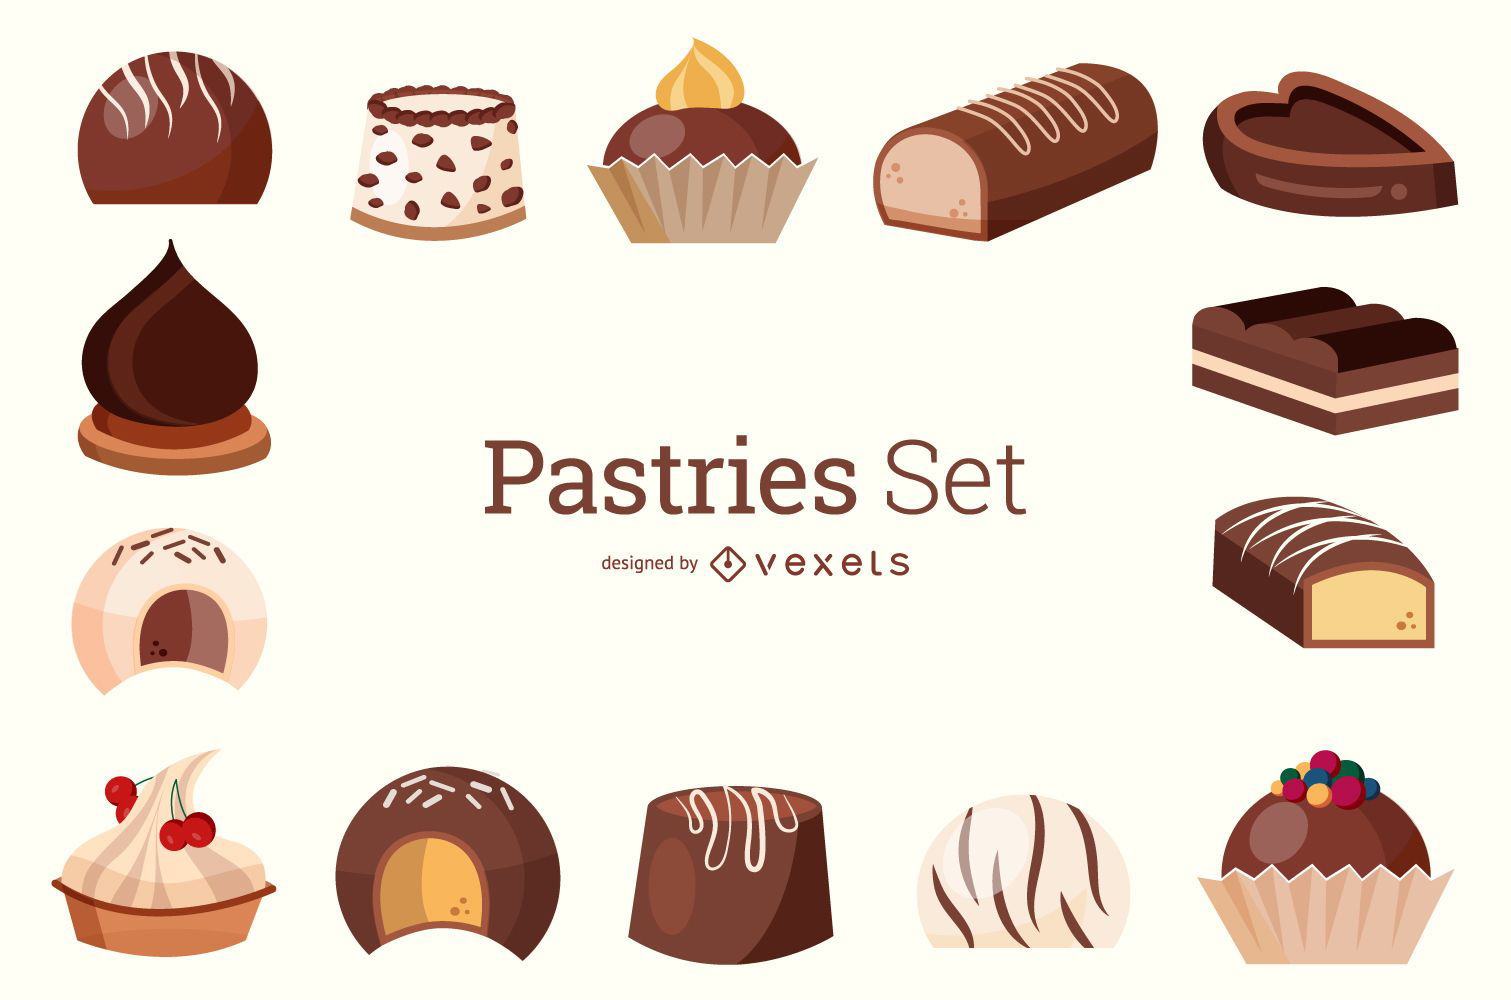 Pastries Set Illustration